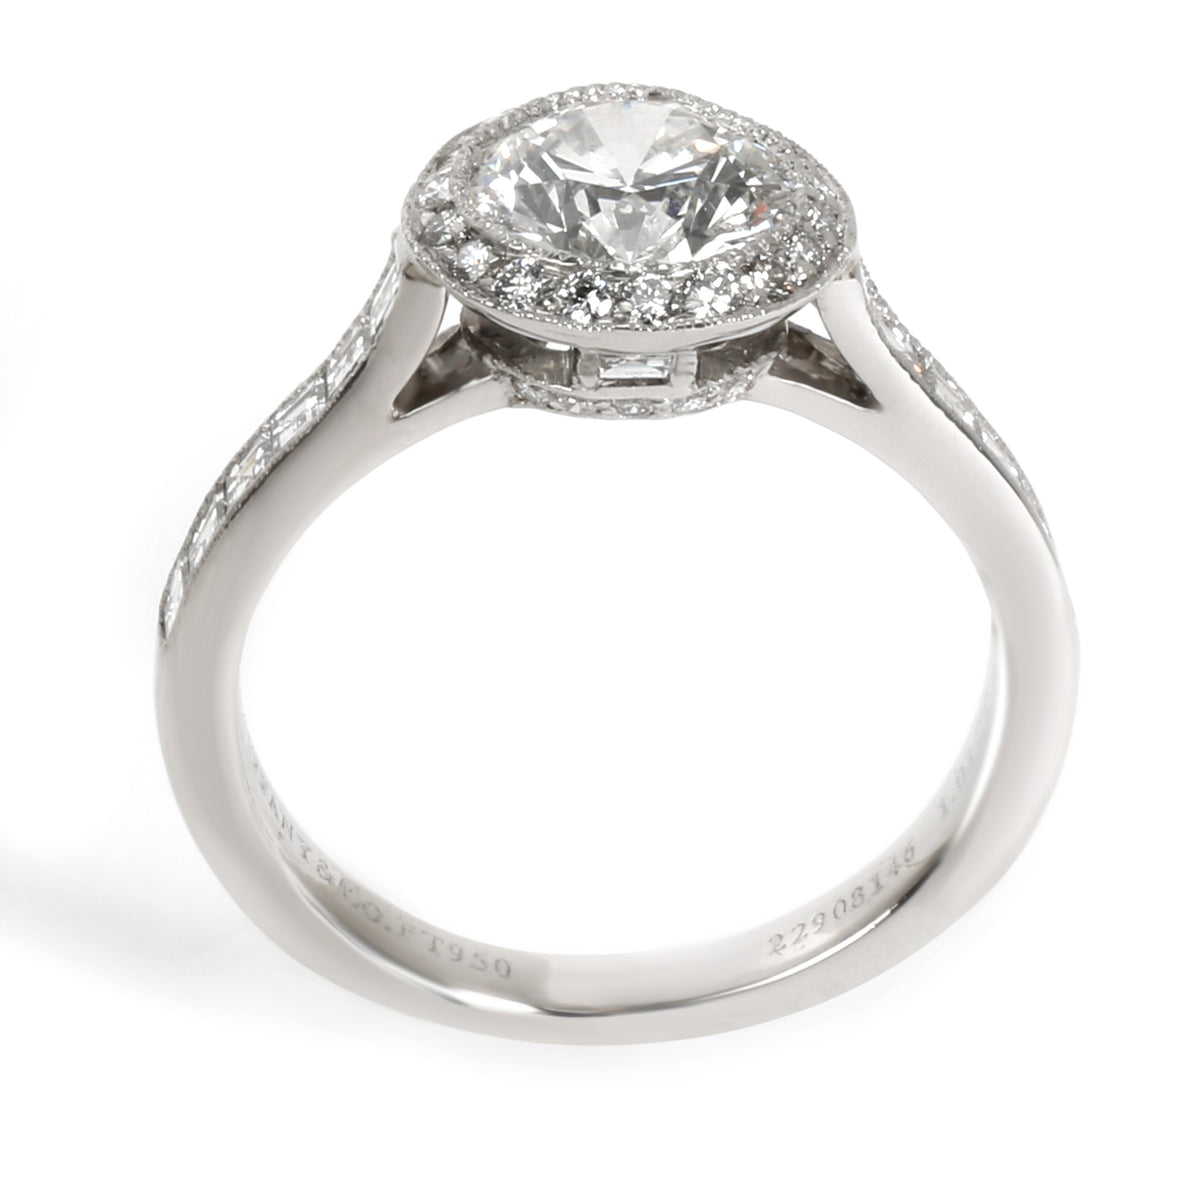 Tiffany & Co. Halo Diamond Engagement Ring in  Platinum E VVS2 1.51 CTW